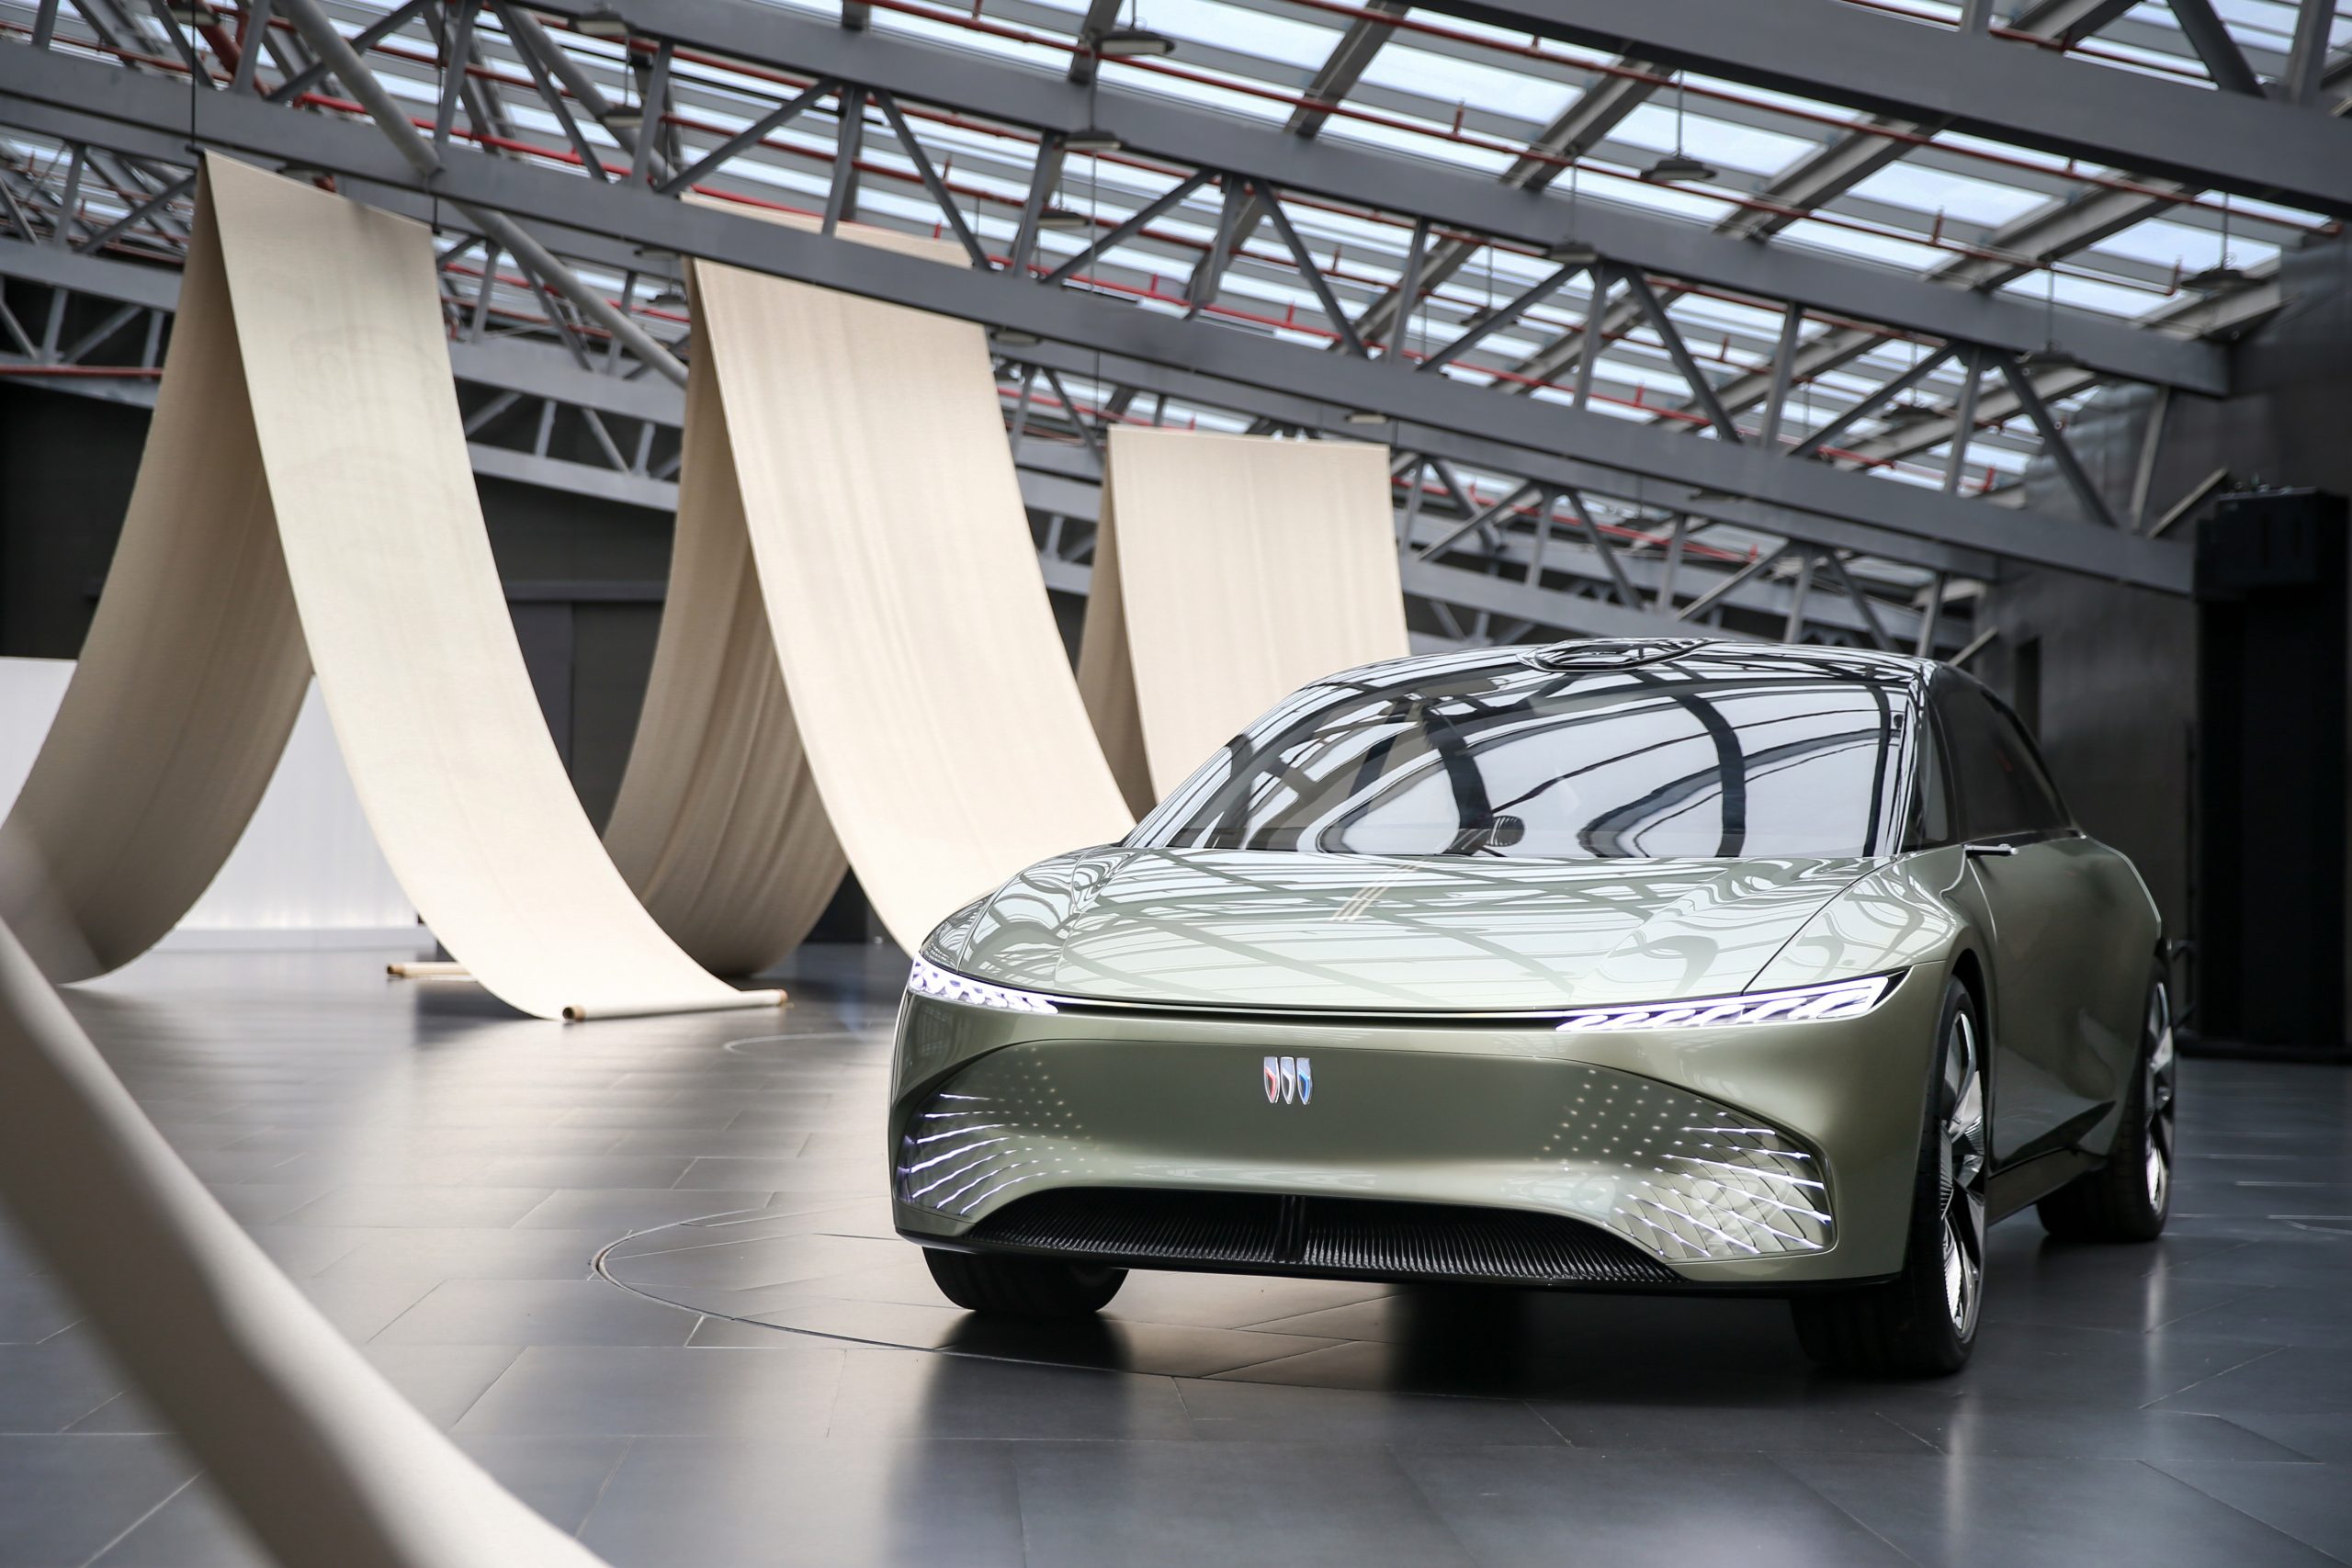 GM China's Visionary Design Center Unveils Futuristic 'Proxima' EV Concept: Inspiring Next-Gen Products Through Human-Centric Tech Innovations